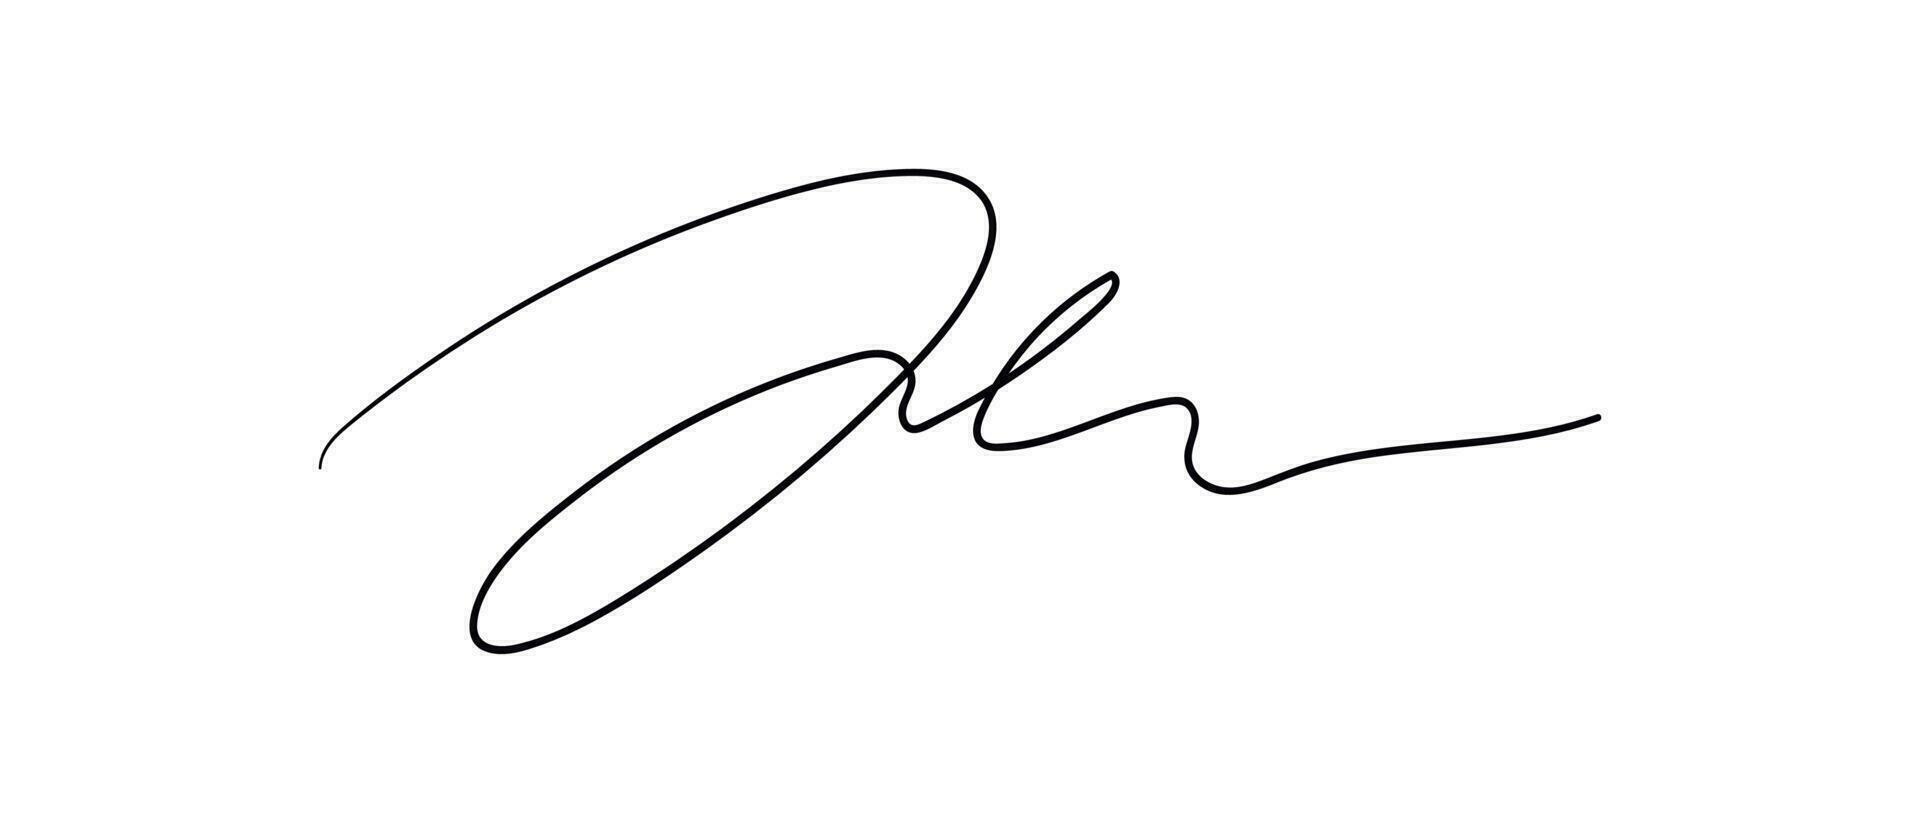 Fälschung Hand gezeichnet Autogramme Satz. handgeschrieben Unterschrift kritzeln zum Geschäft Zertifikat oder Brief. Vektor isoliert Illustration